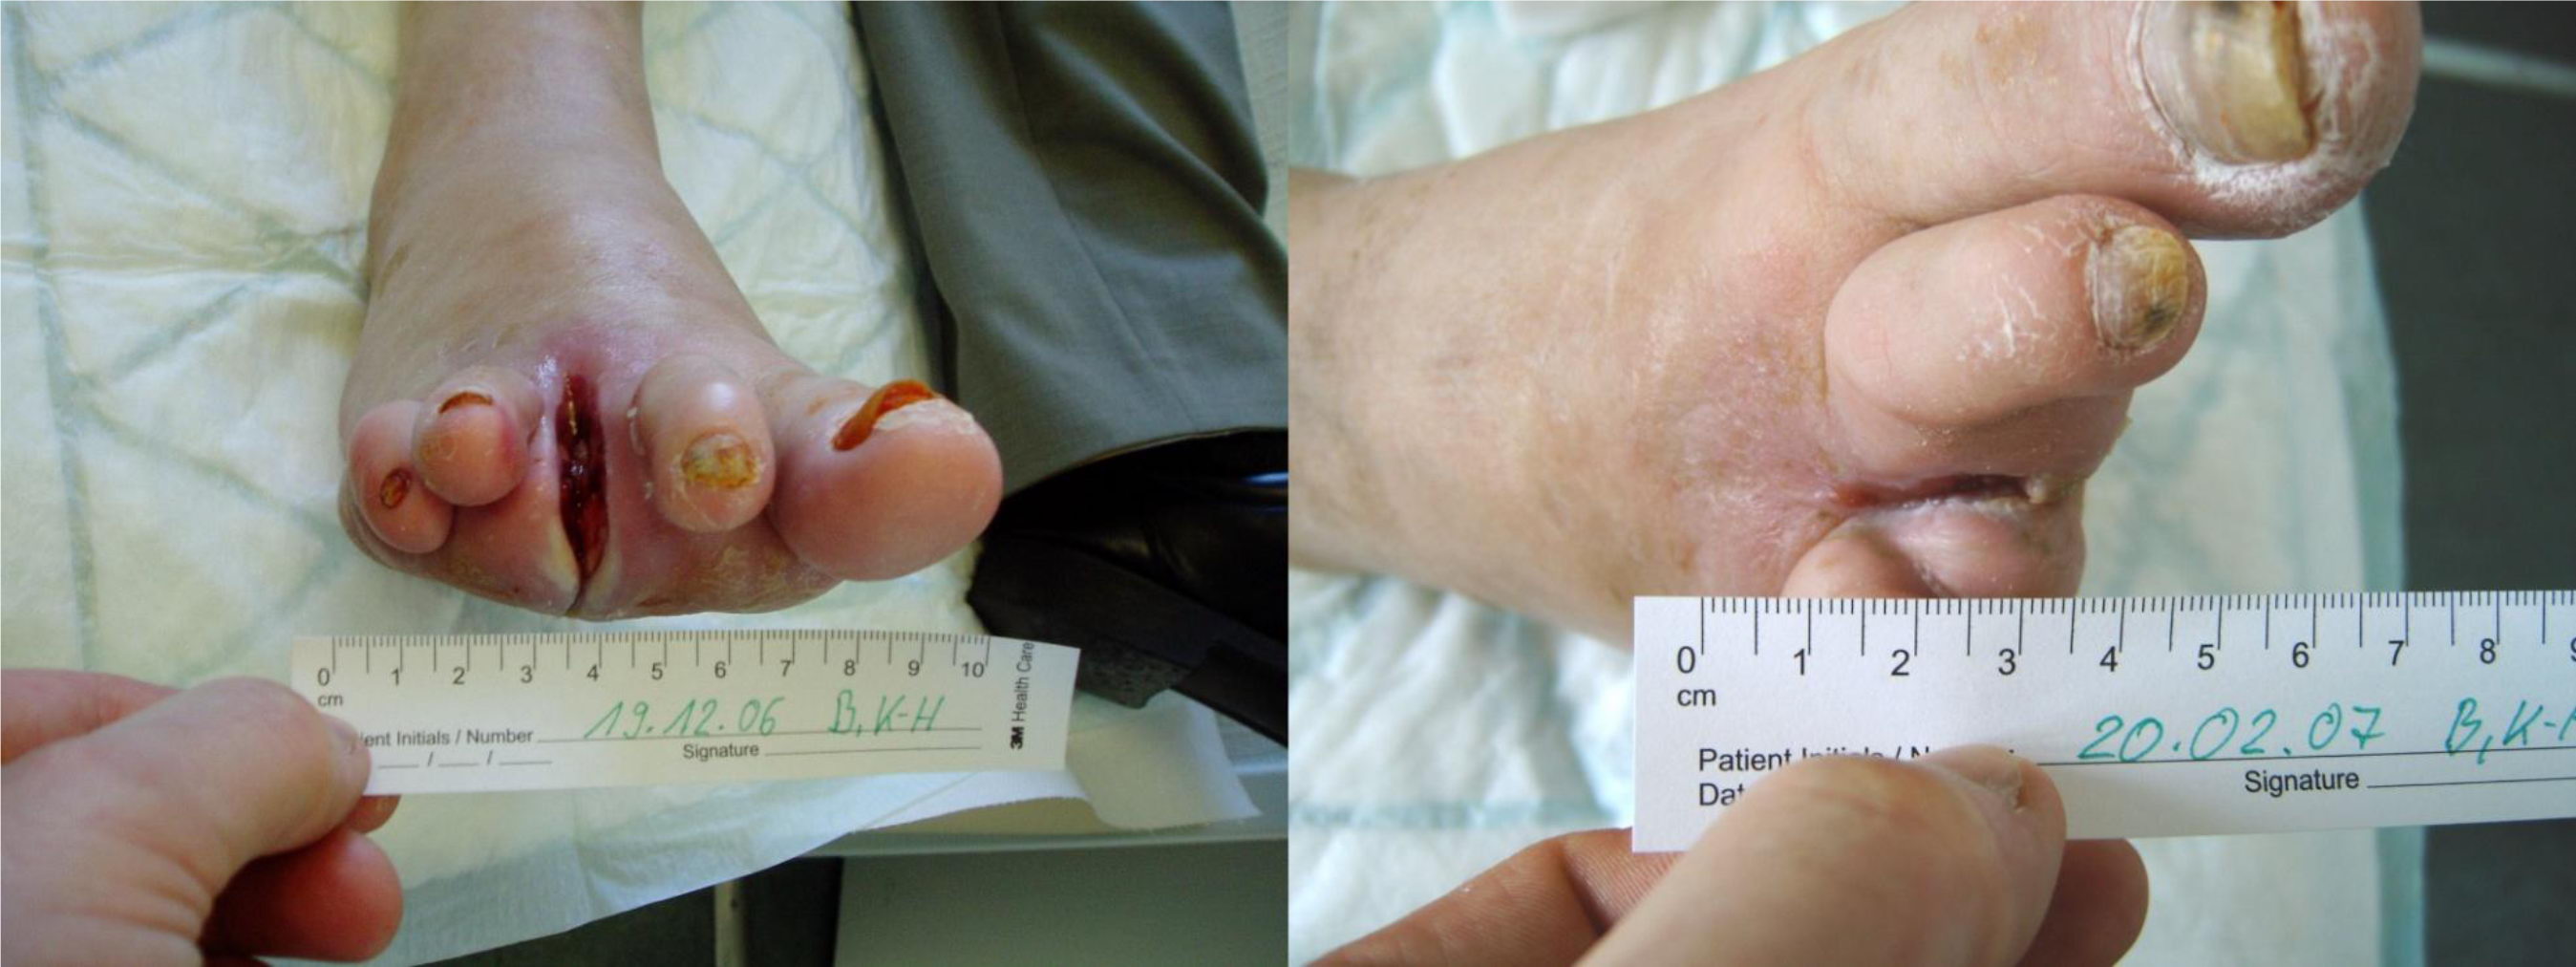 diabetic foot swiss medica stem cells clinic treatment